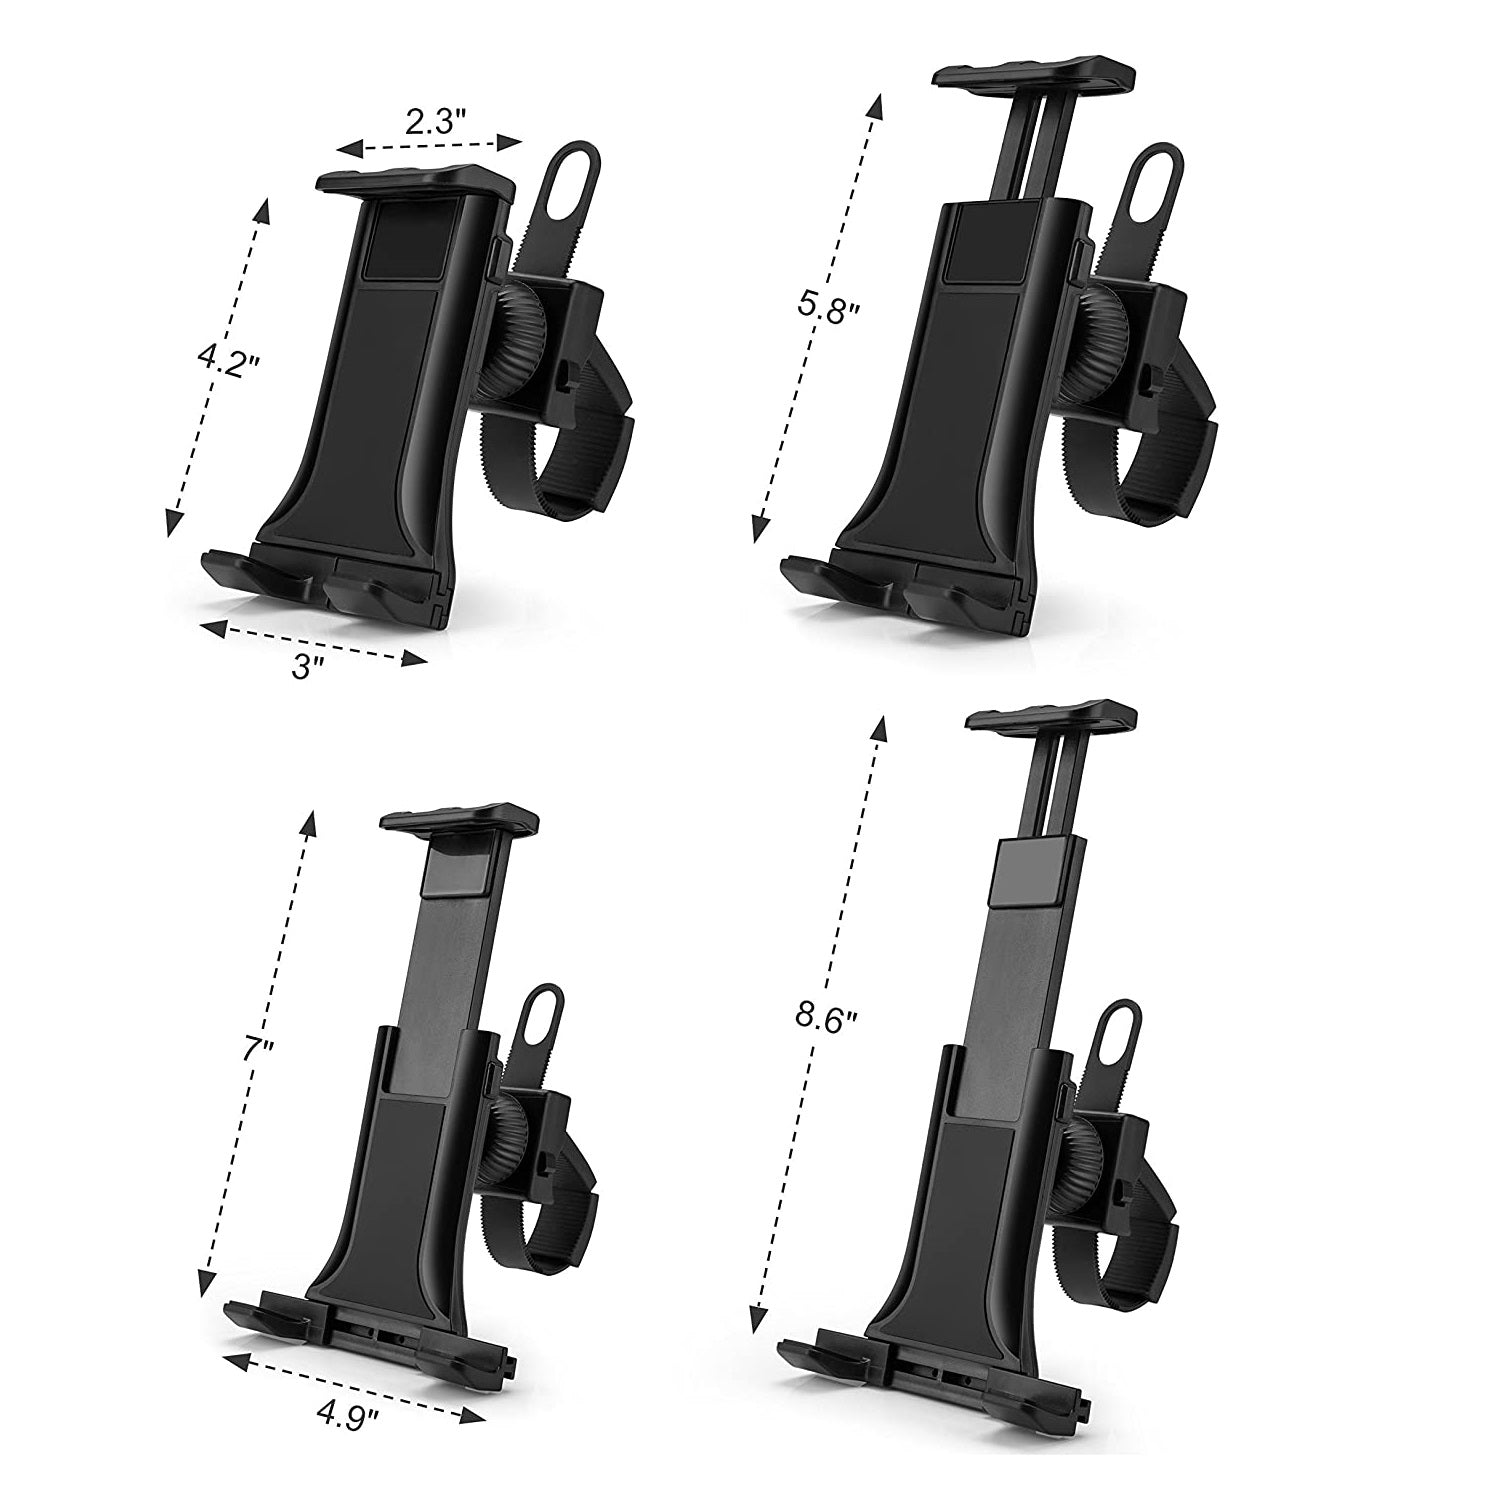 pram bike gym treadmill mount ipad tablet